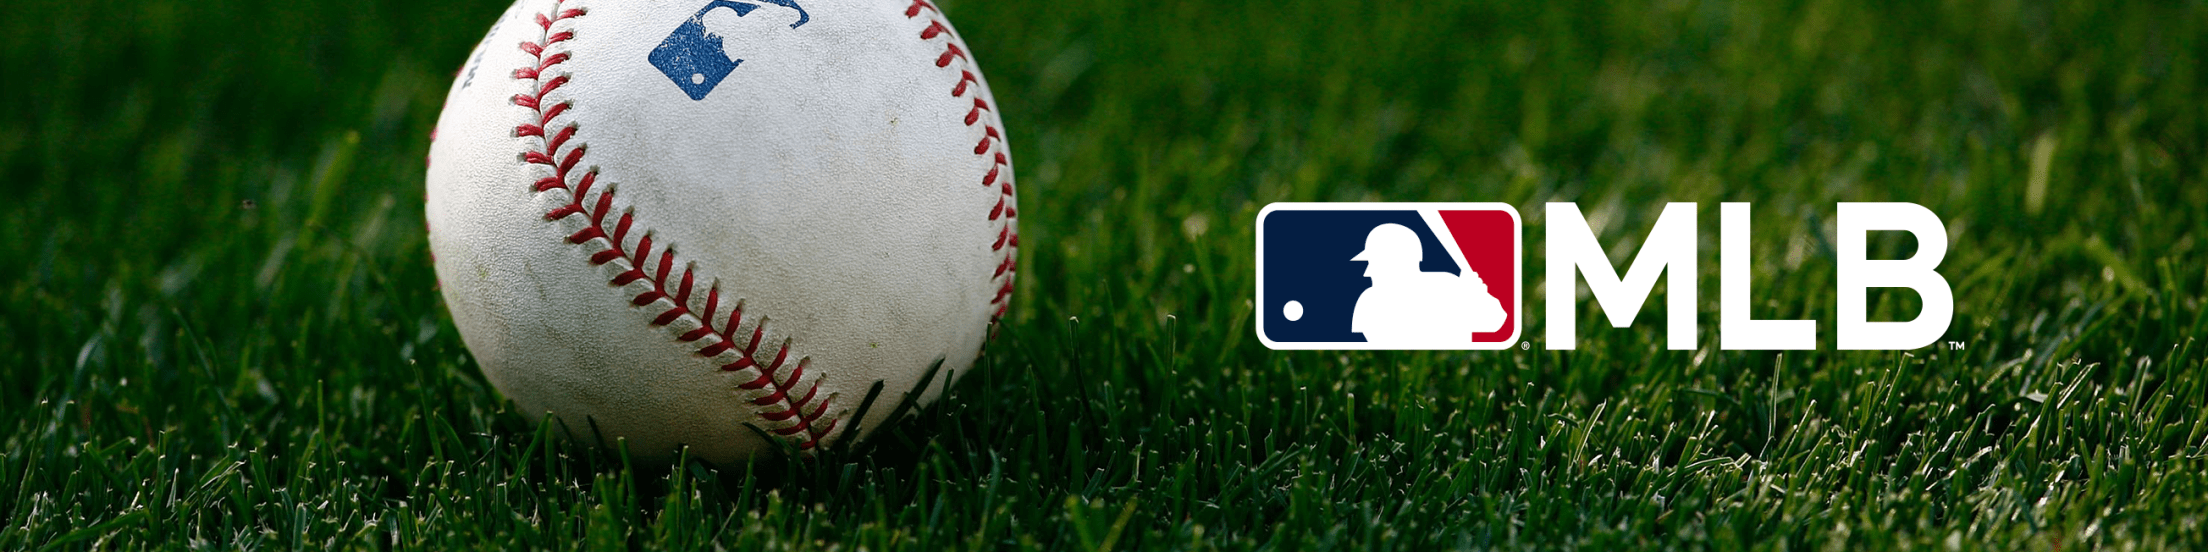 Chia sẻ với hơn 55 về beisbol MLB gratis en vivo mới nhất   cdgdbentreeduvn